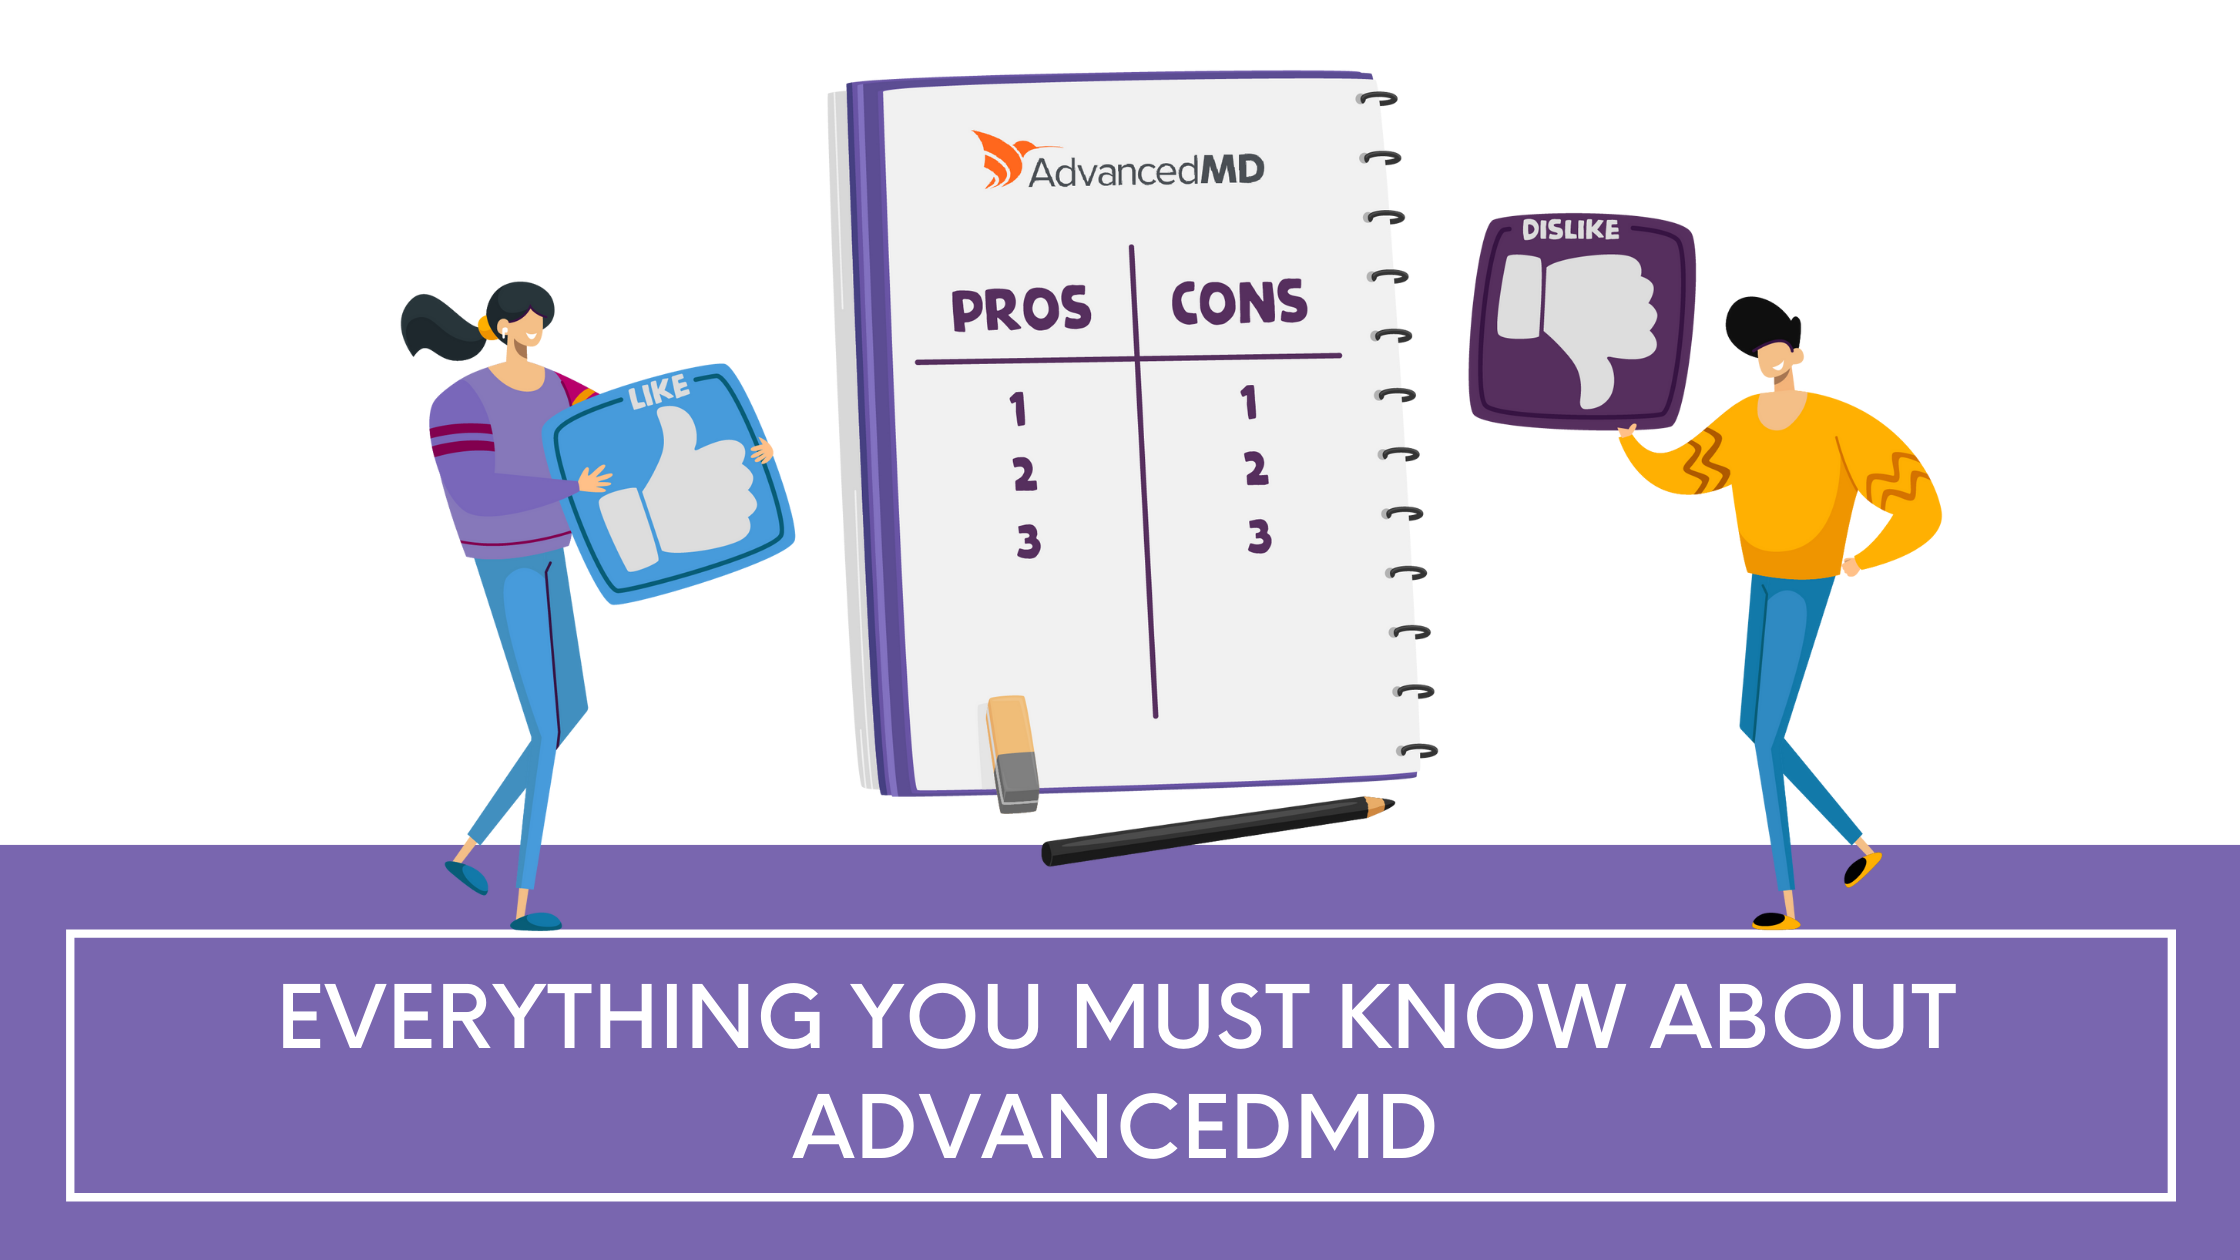 AdvancedMD-Pros-Cons